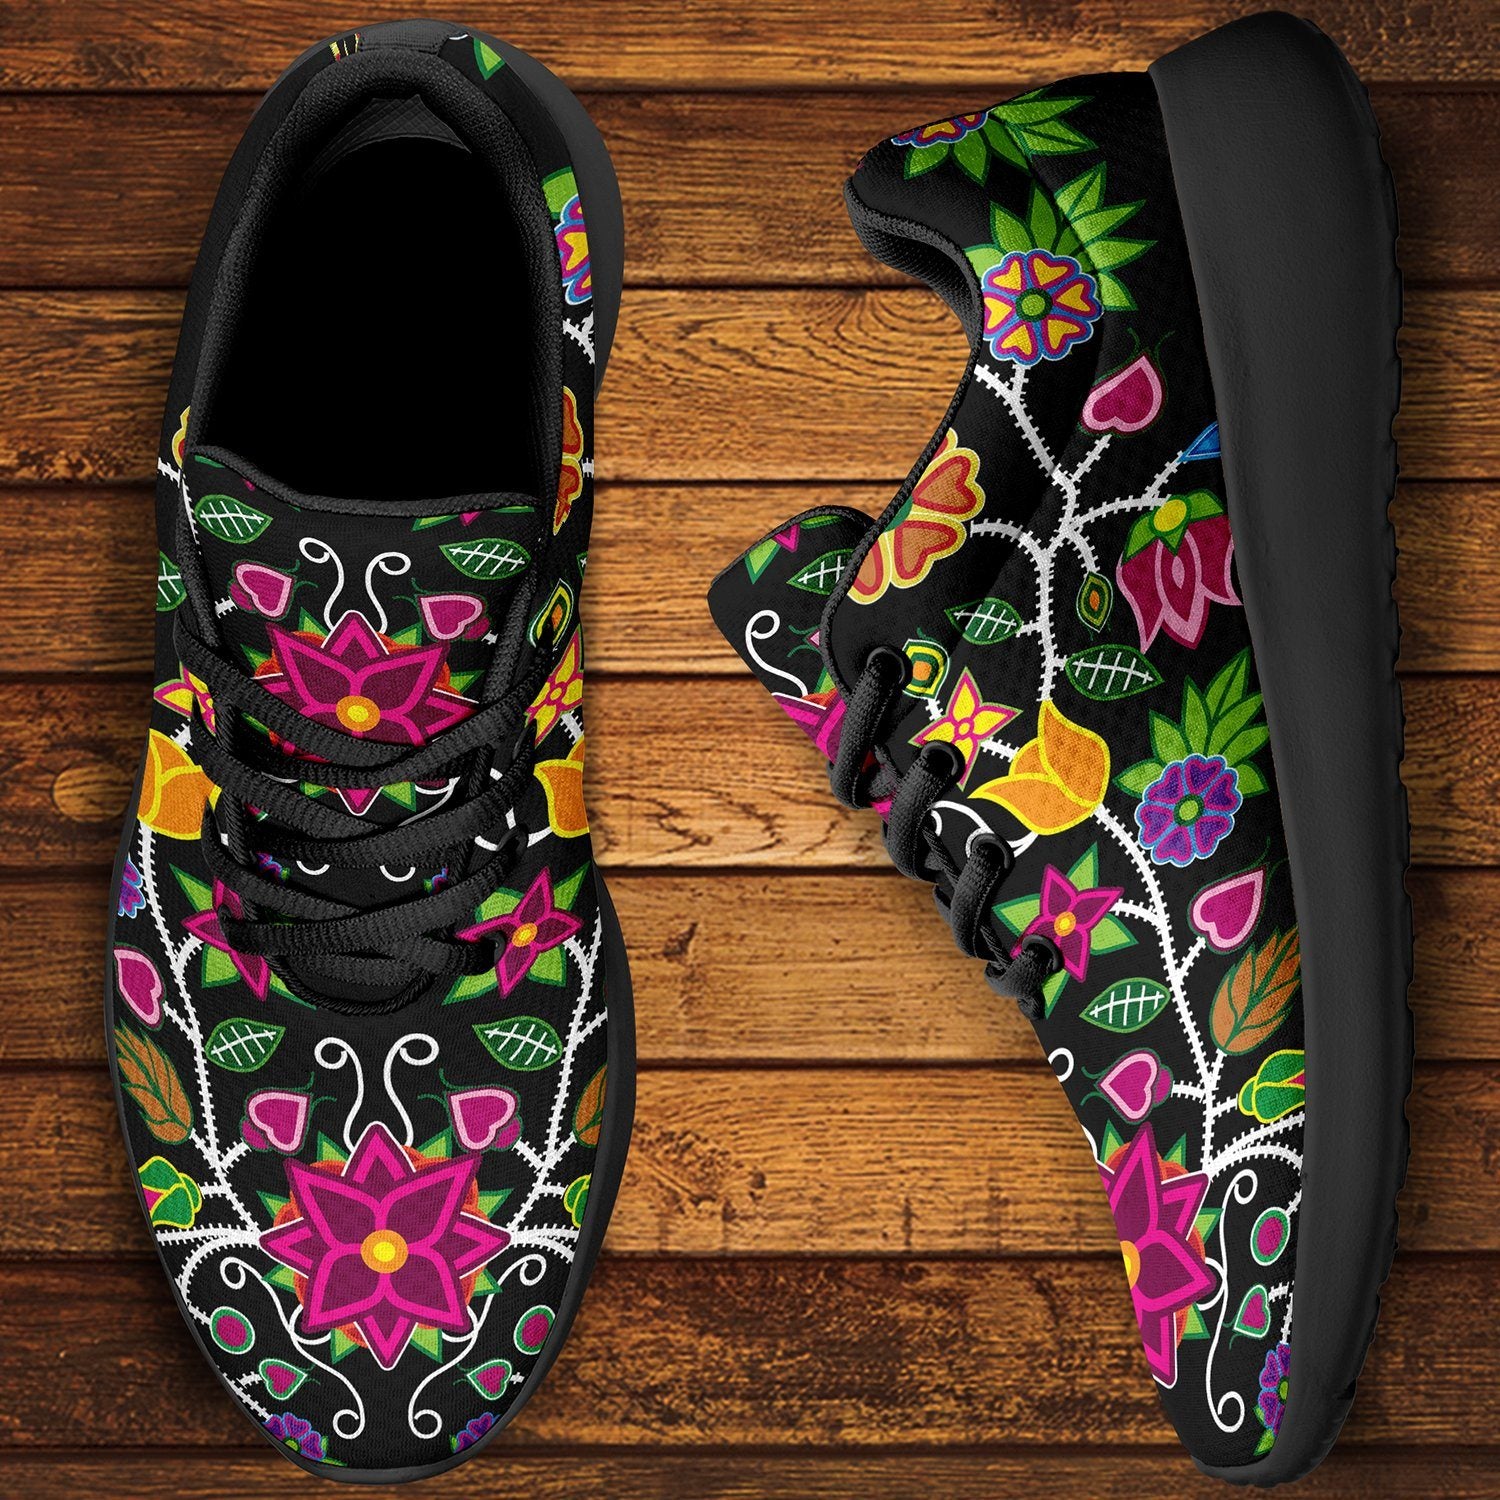 Floral Beadwork Ikkaayi Sport Sneakers 49 Dzine 